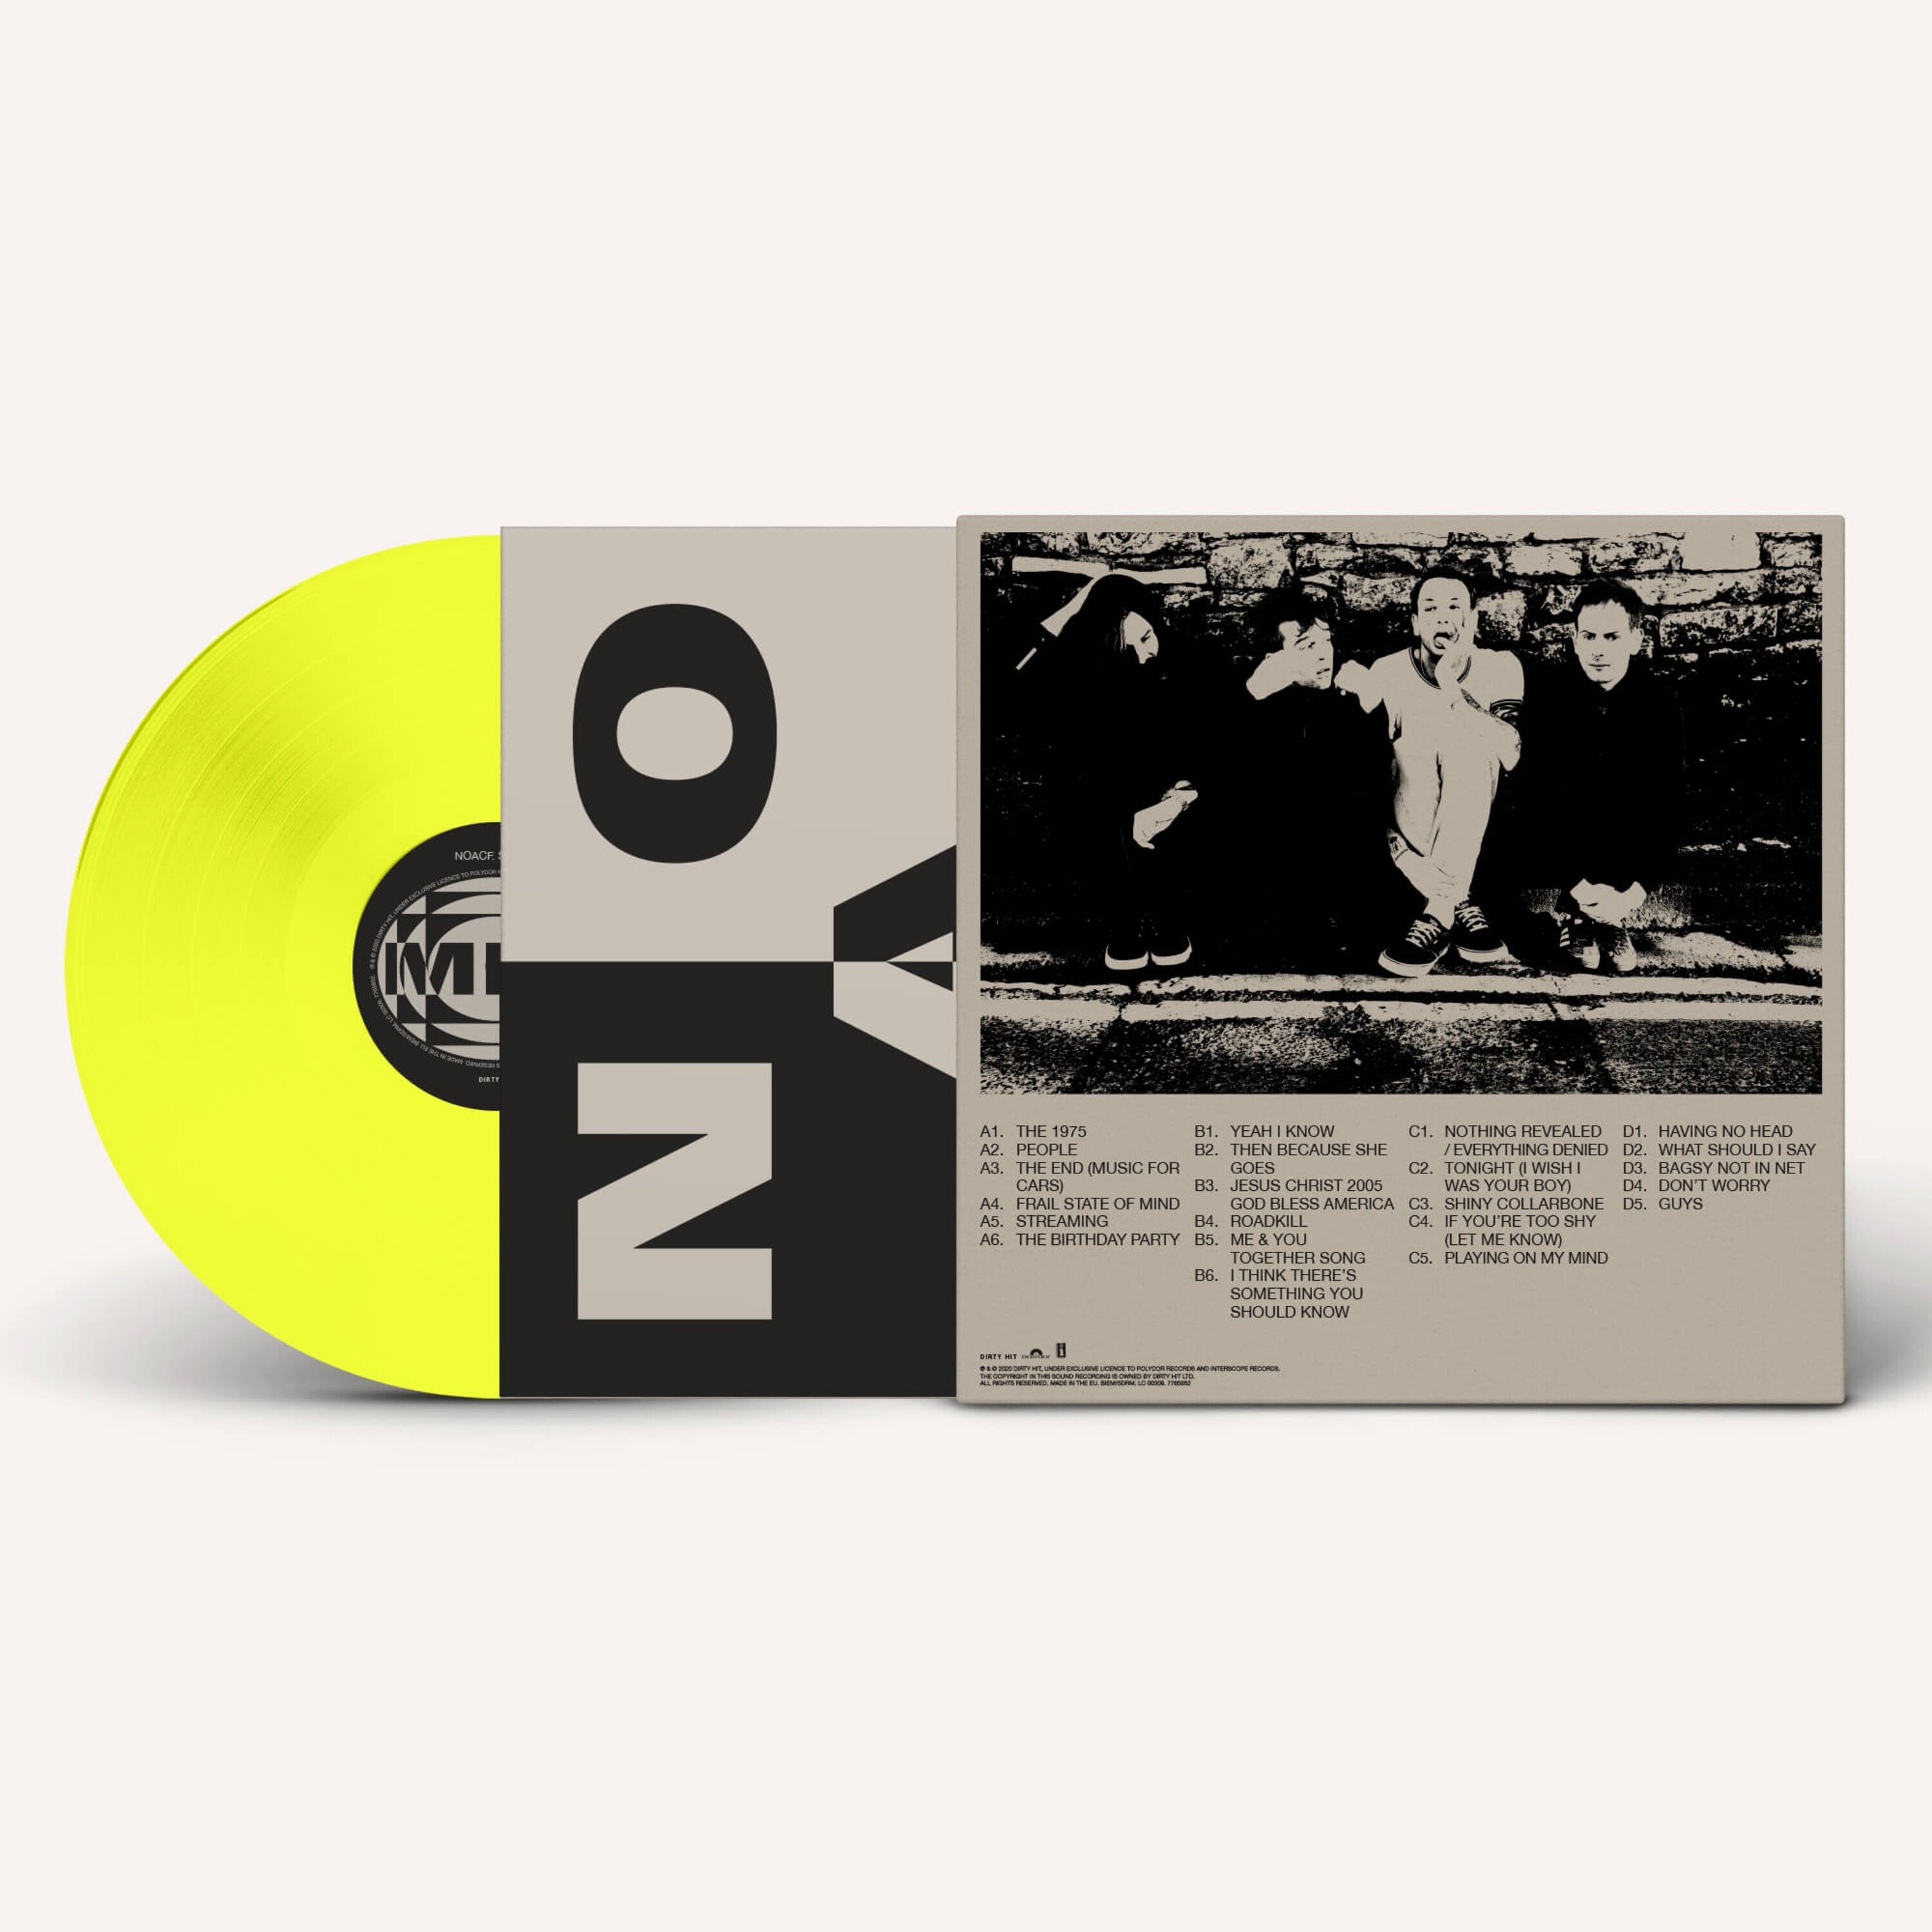 La Clave (Limited Edition Yellow Vinyl)